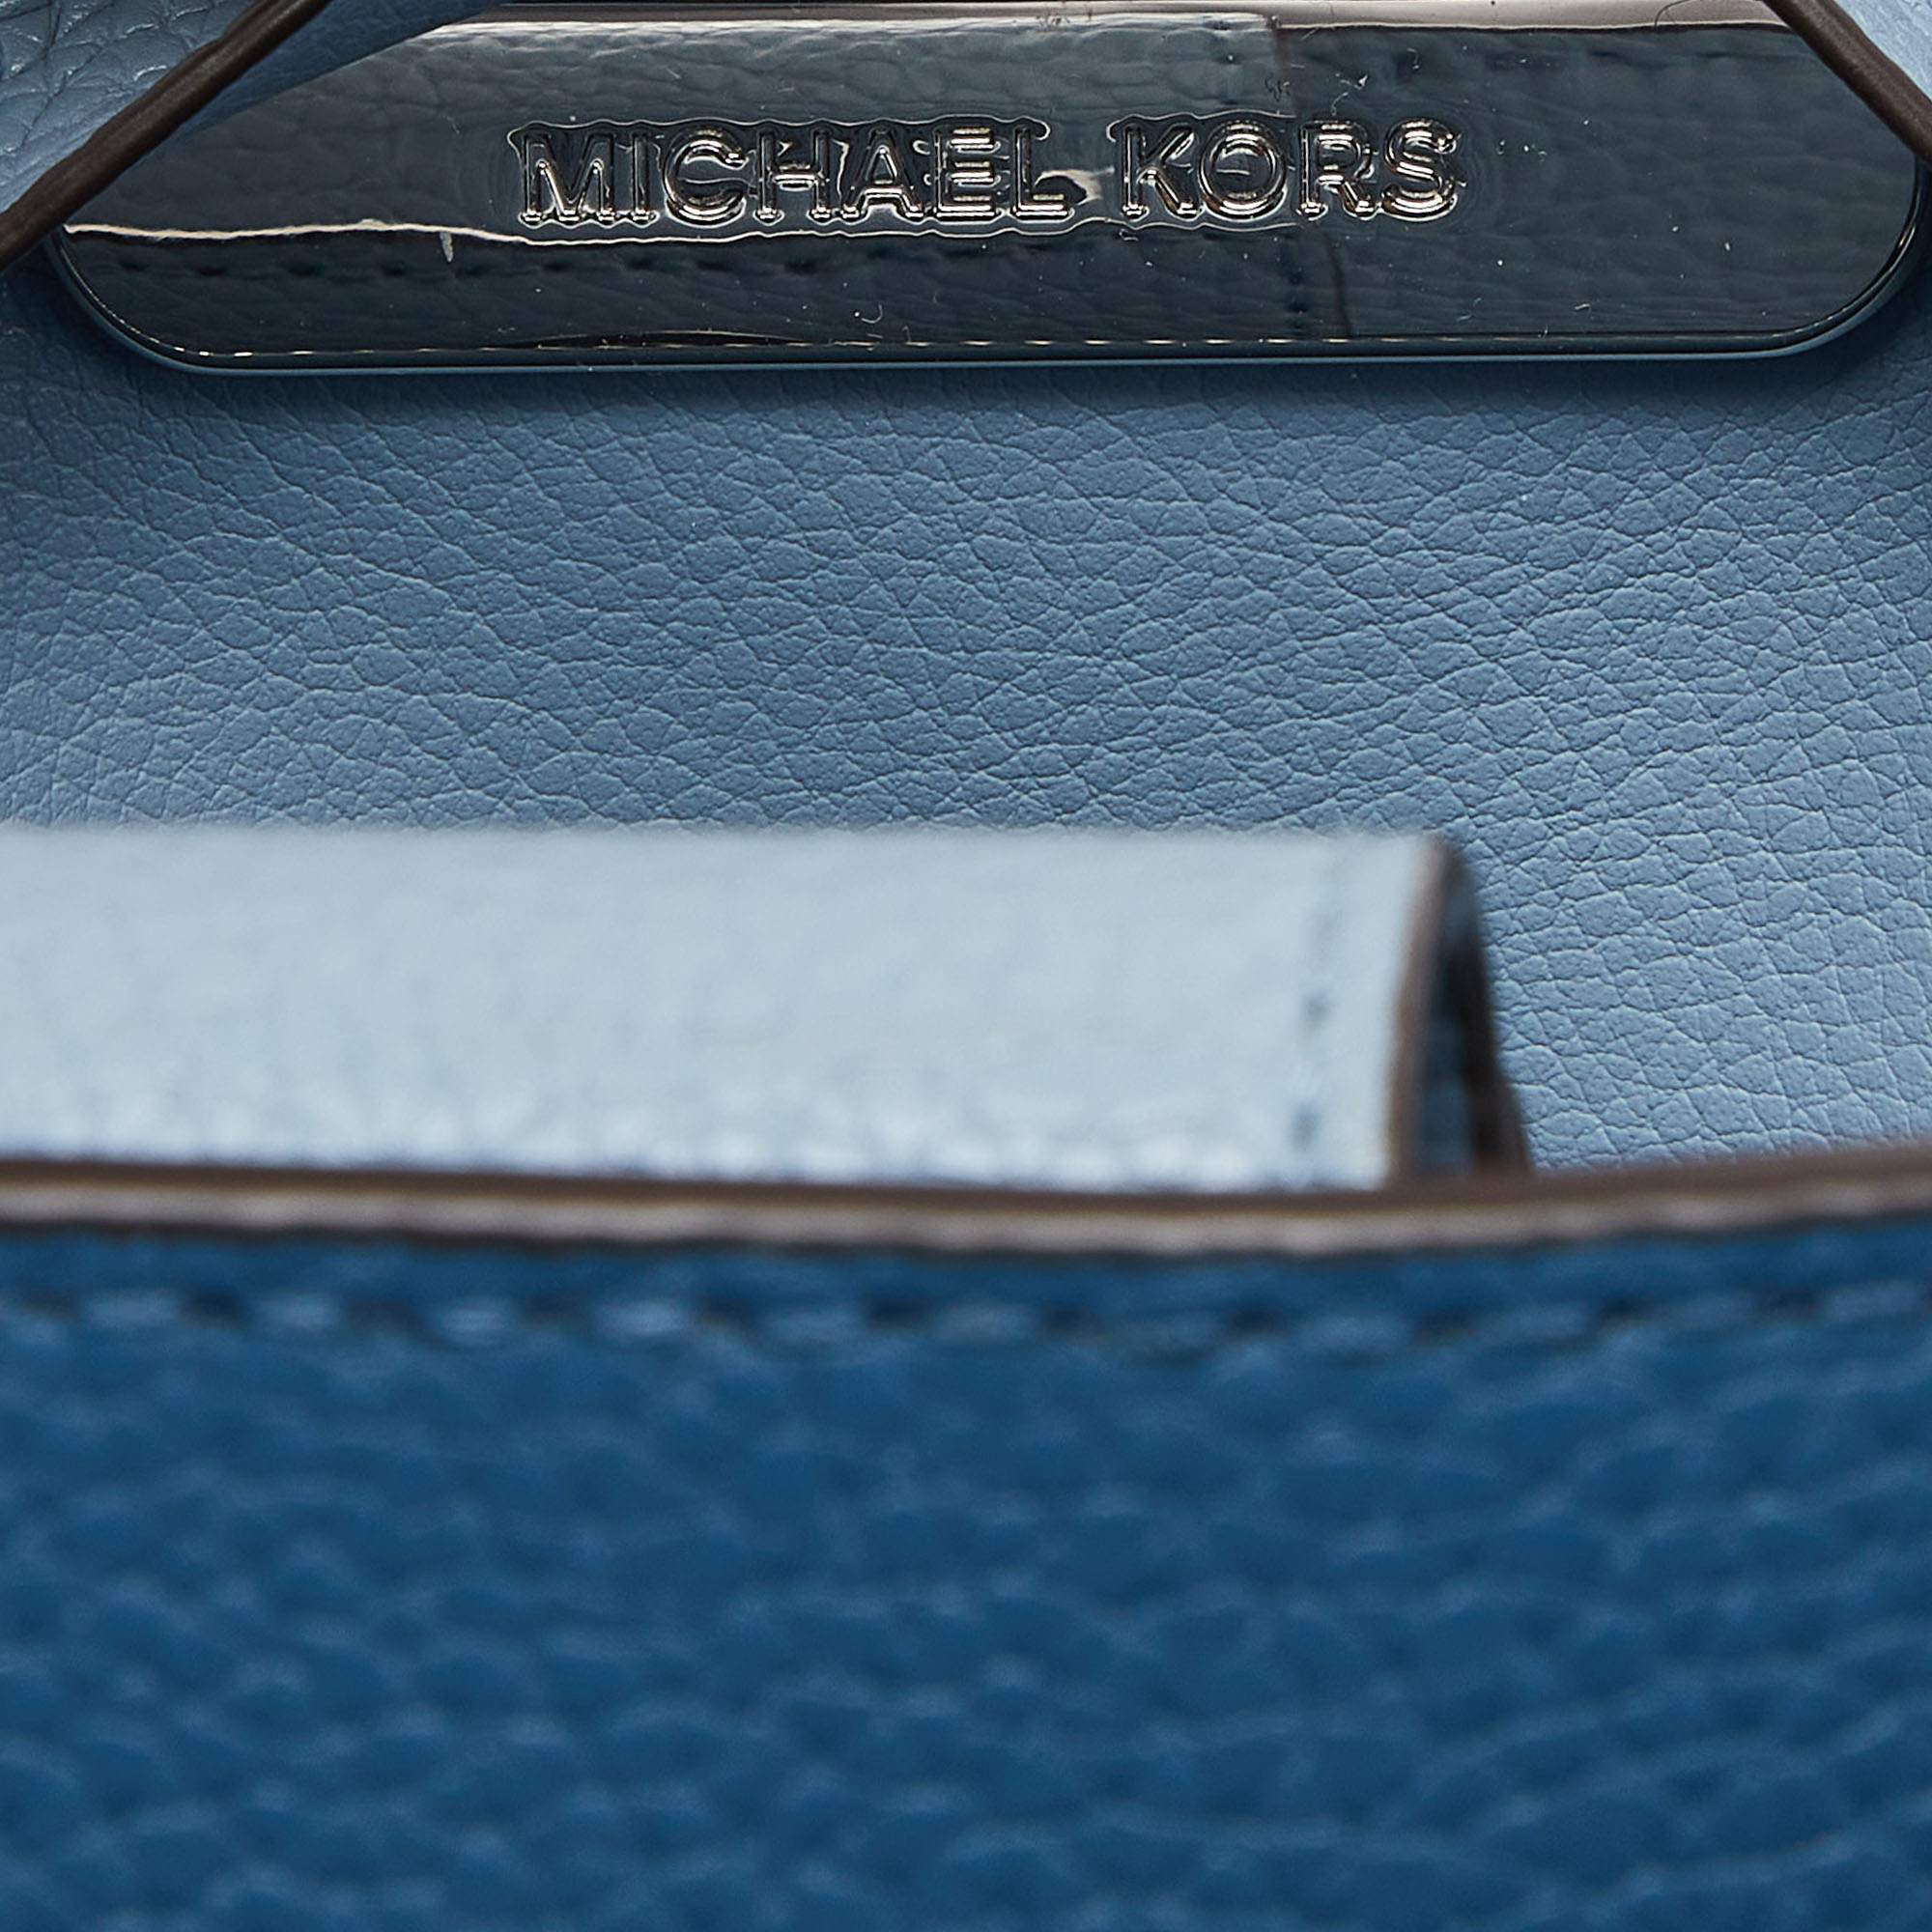 Michael Kors Multi Tone Blue Leather Small Kimberly Satchel